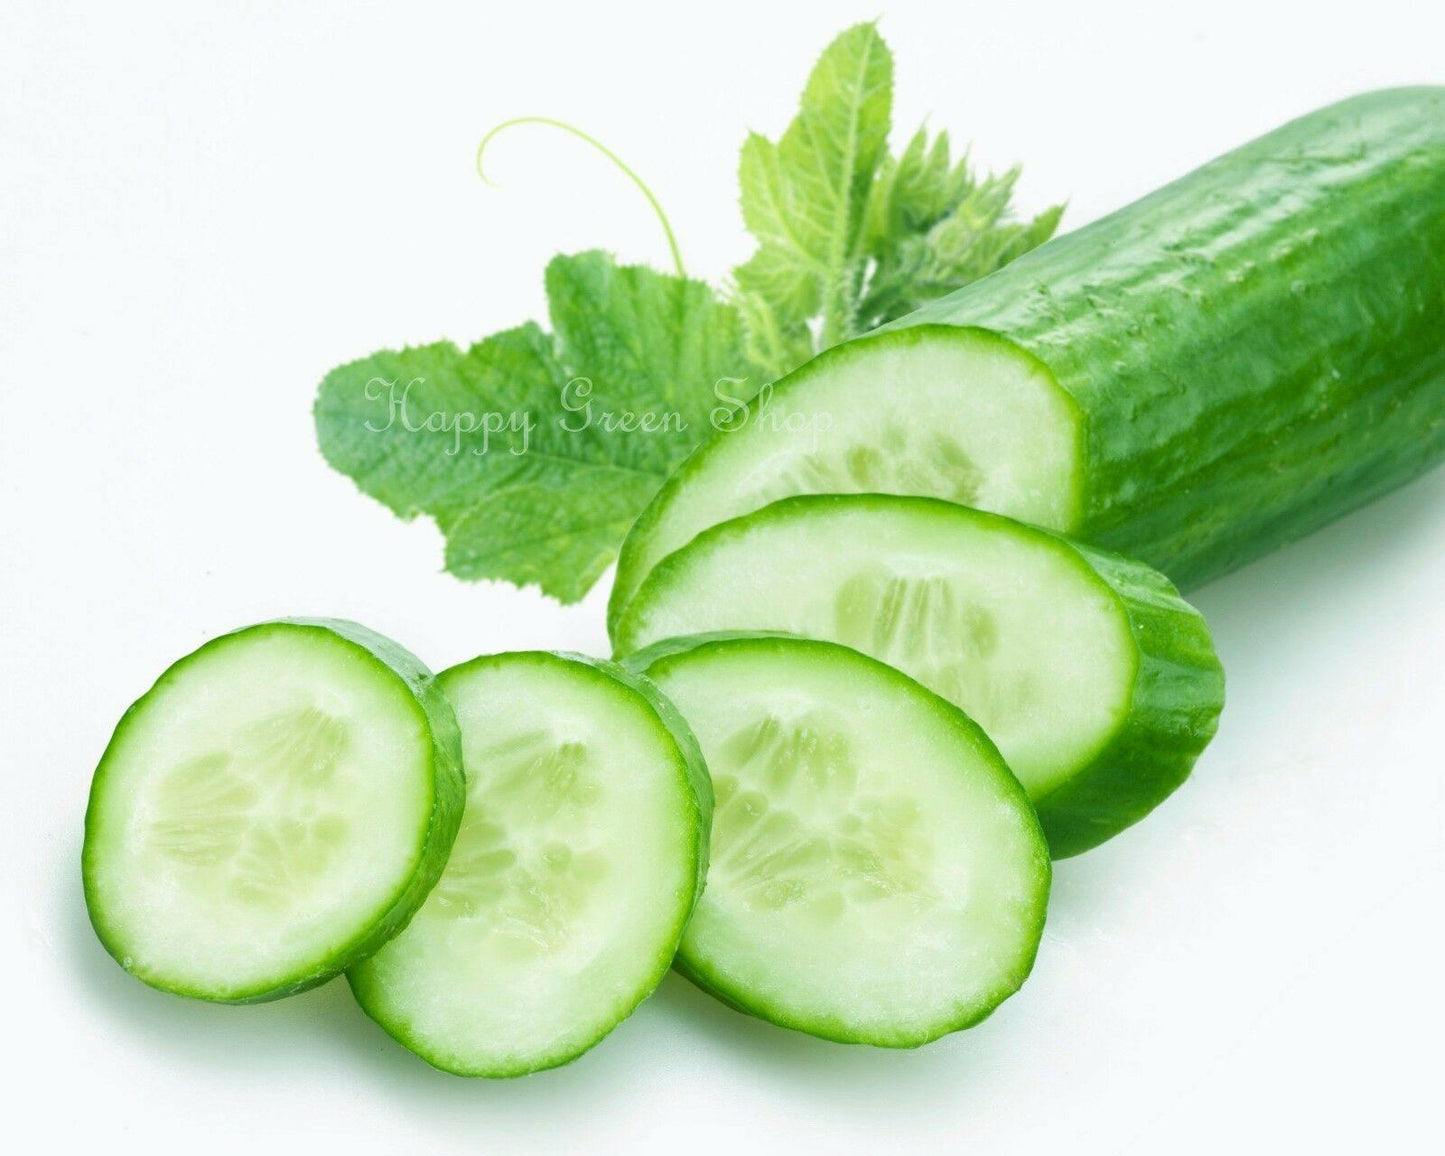 80 Cucumber King of Salad Seeds